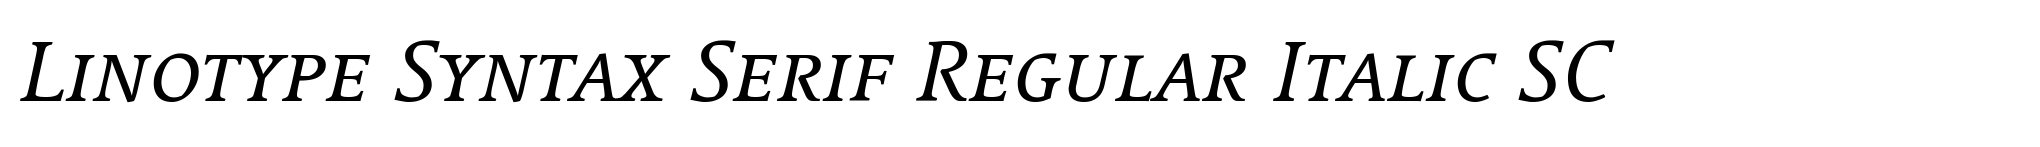 Linotype Syntax Serif Regular Italic SC image